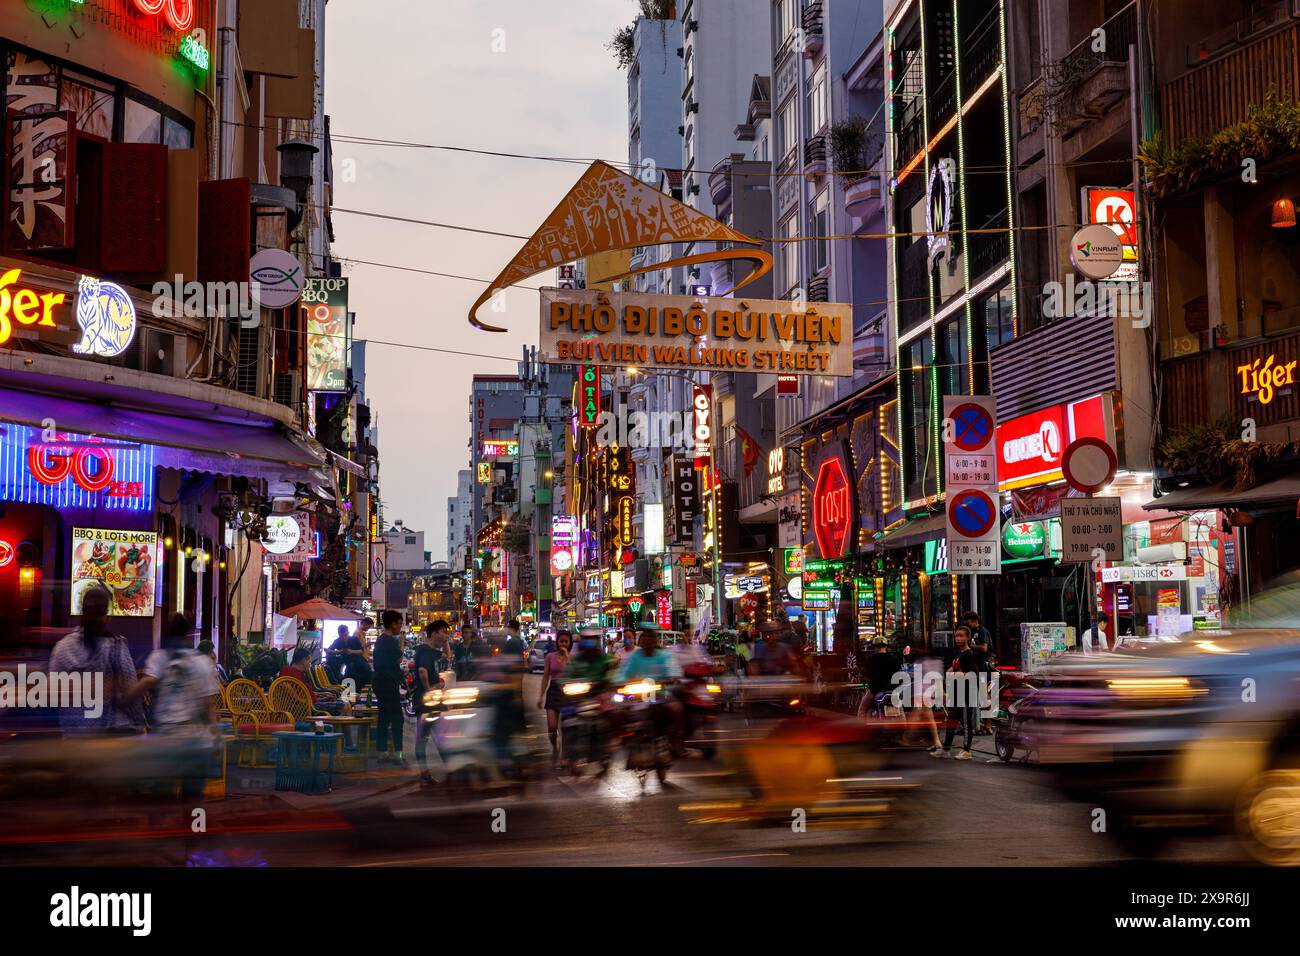 The Walking Street Bui Vien in Saigon at night Stock Photo